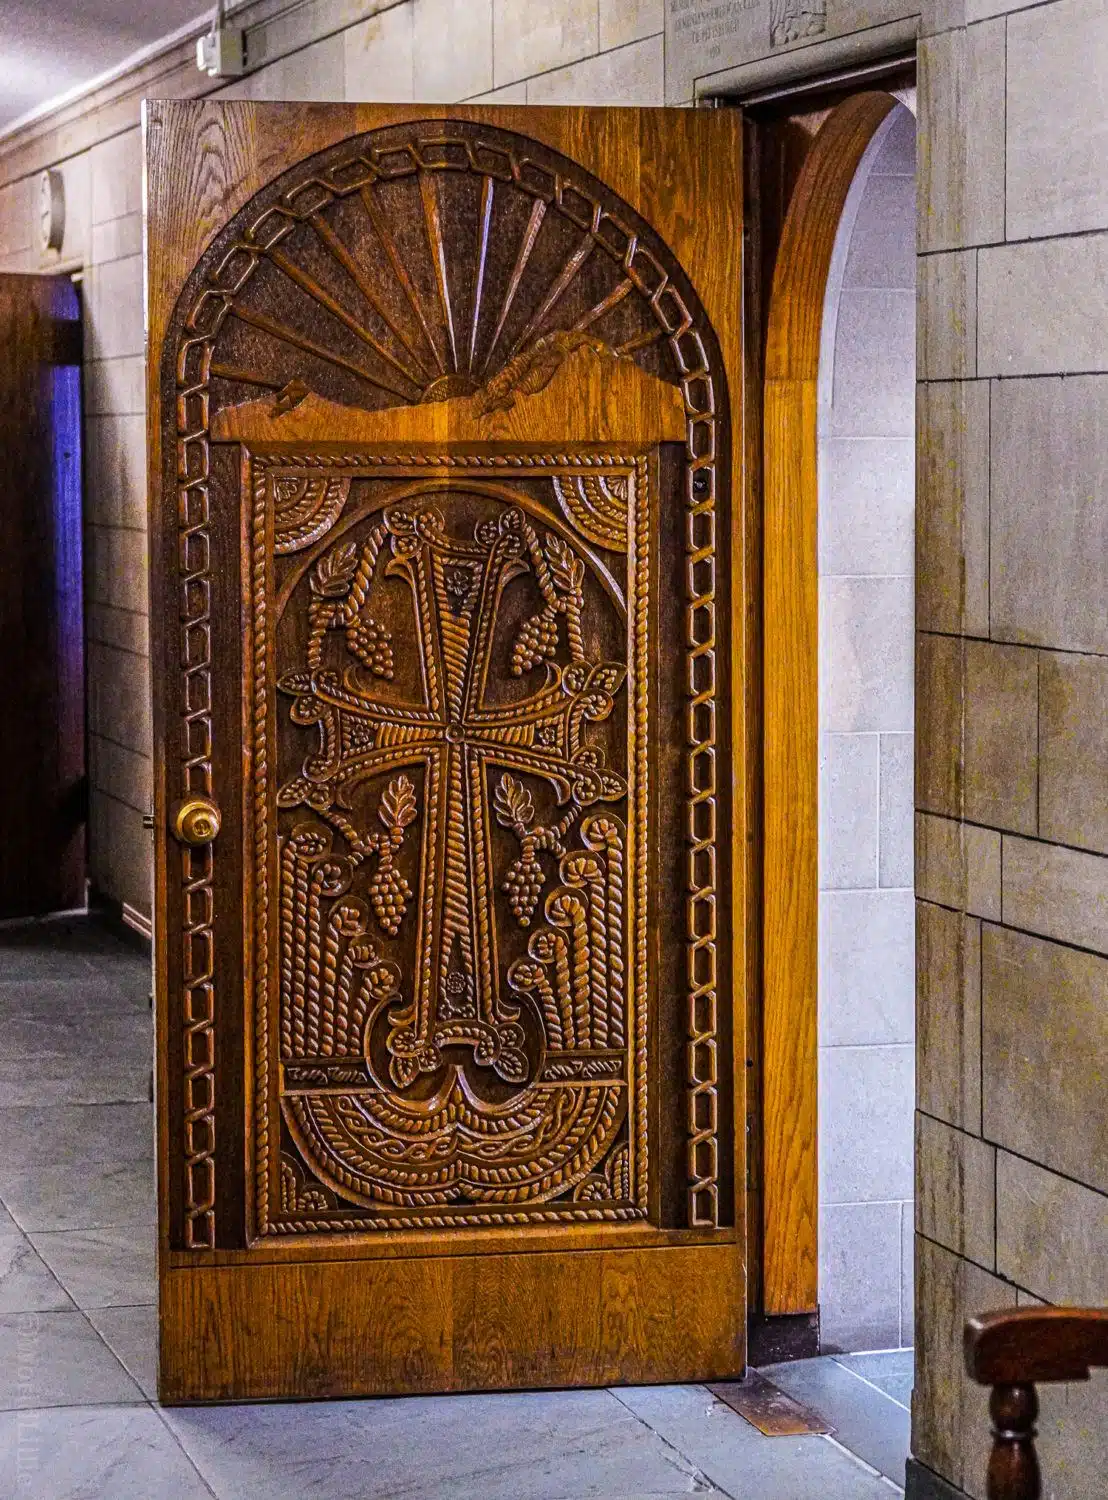 An ornate wooden door in the Armenian room.